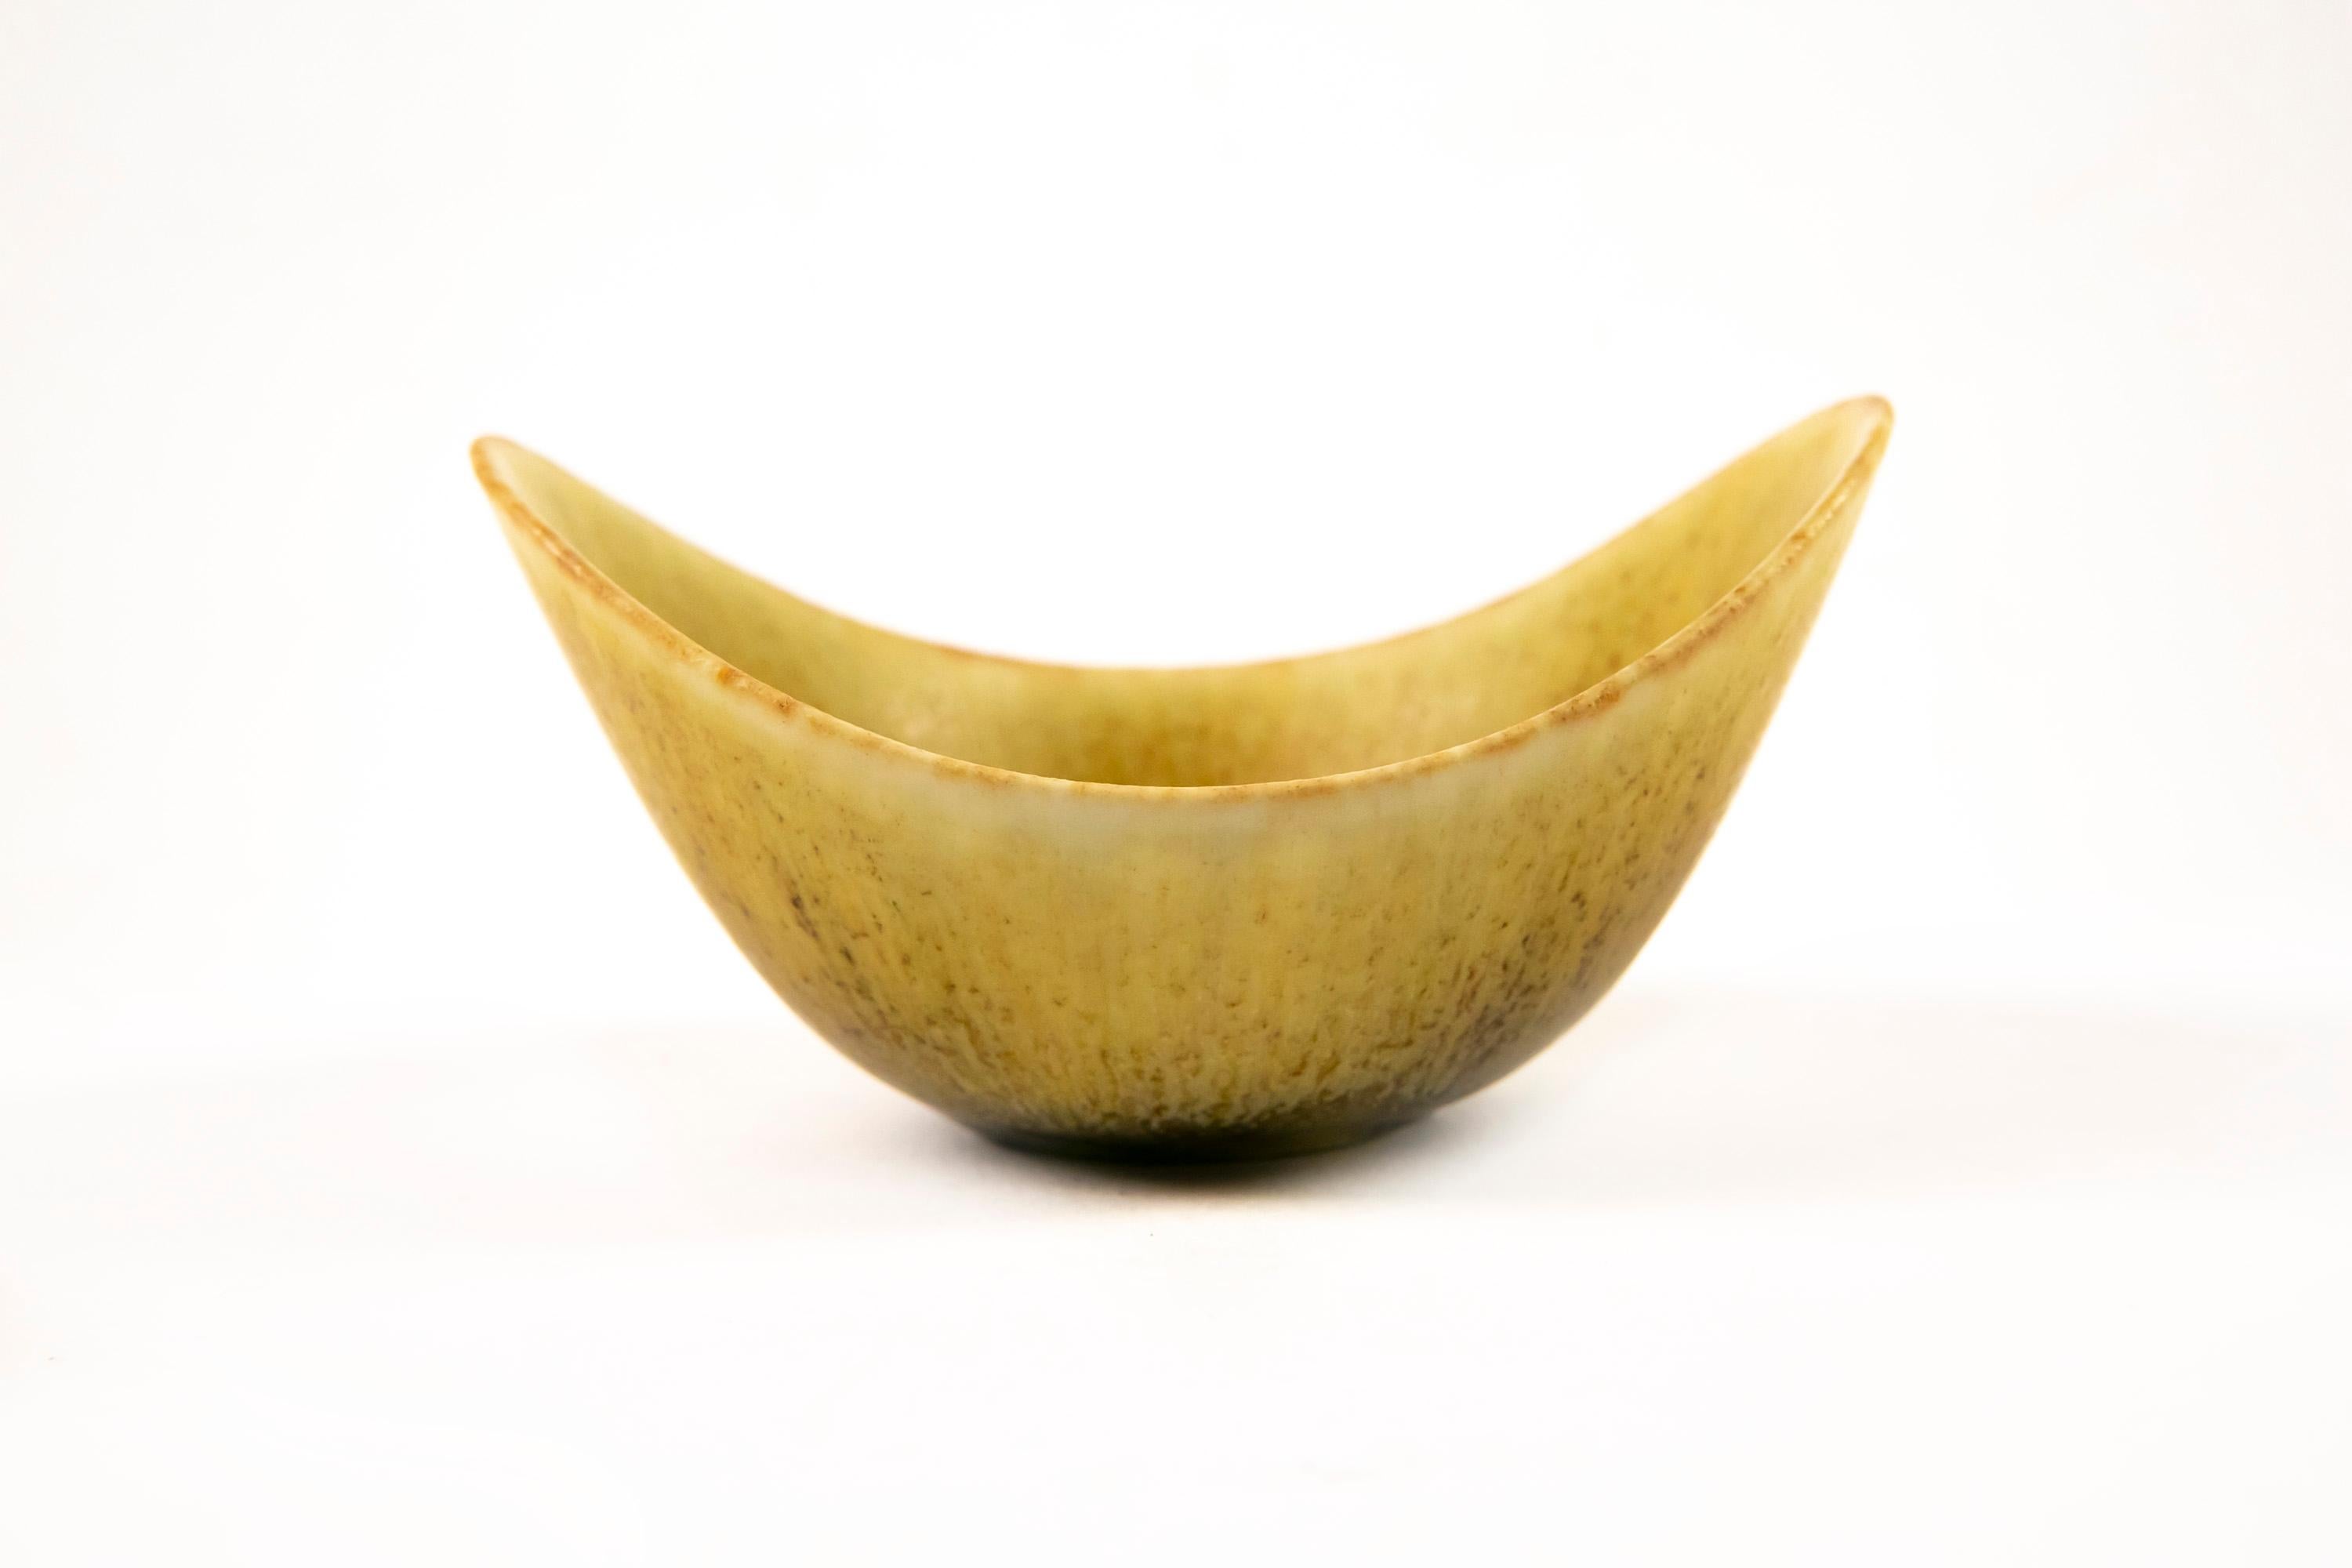 Gunnar Nylund ARO Stoneware Bowl Dandelion Yellow Glaze Rorstrand Sweden 1960s

Measurements: 4